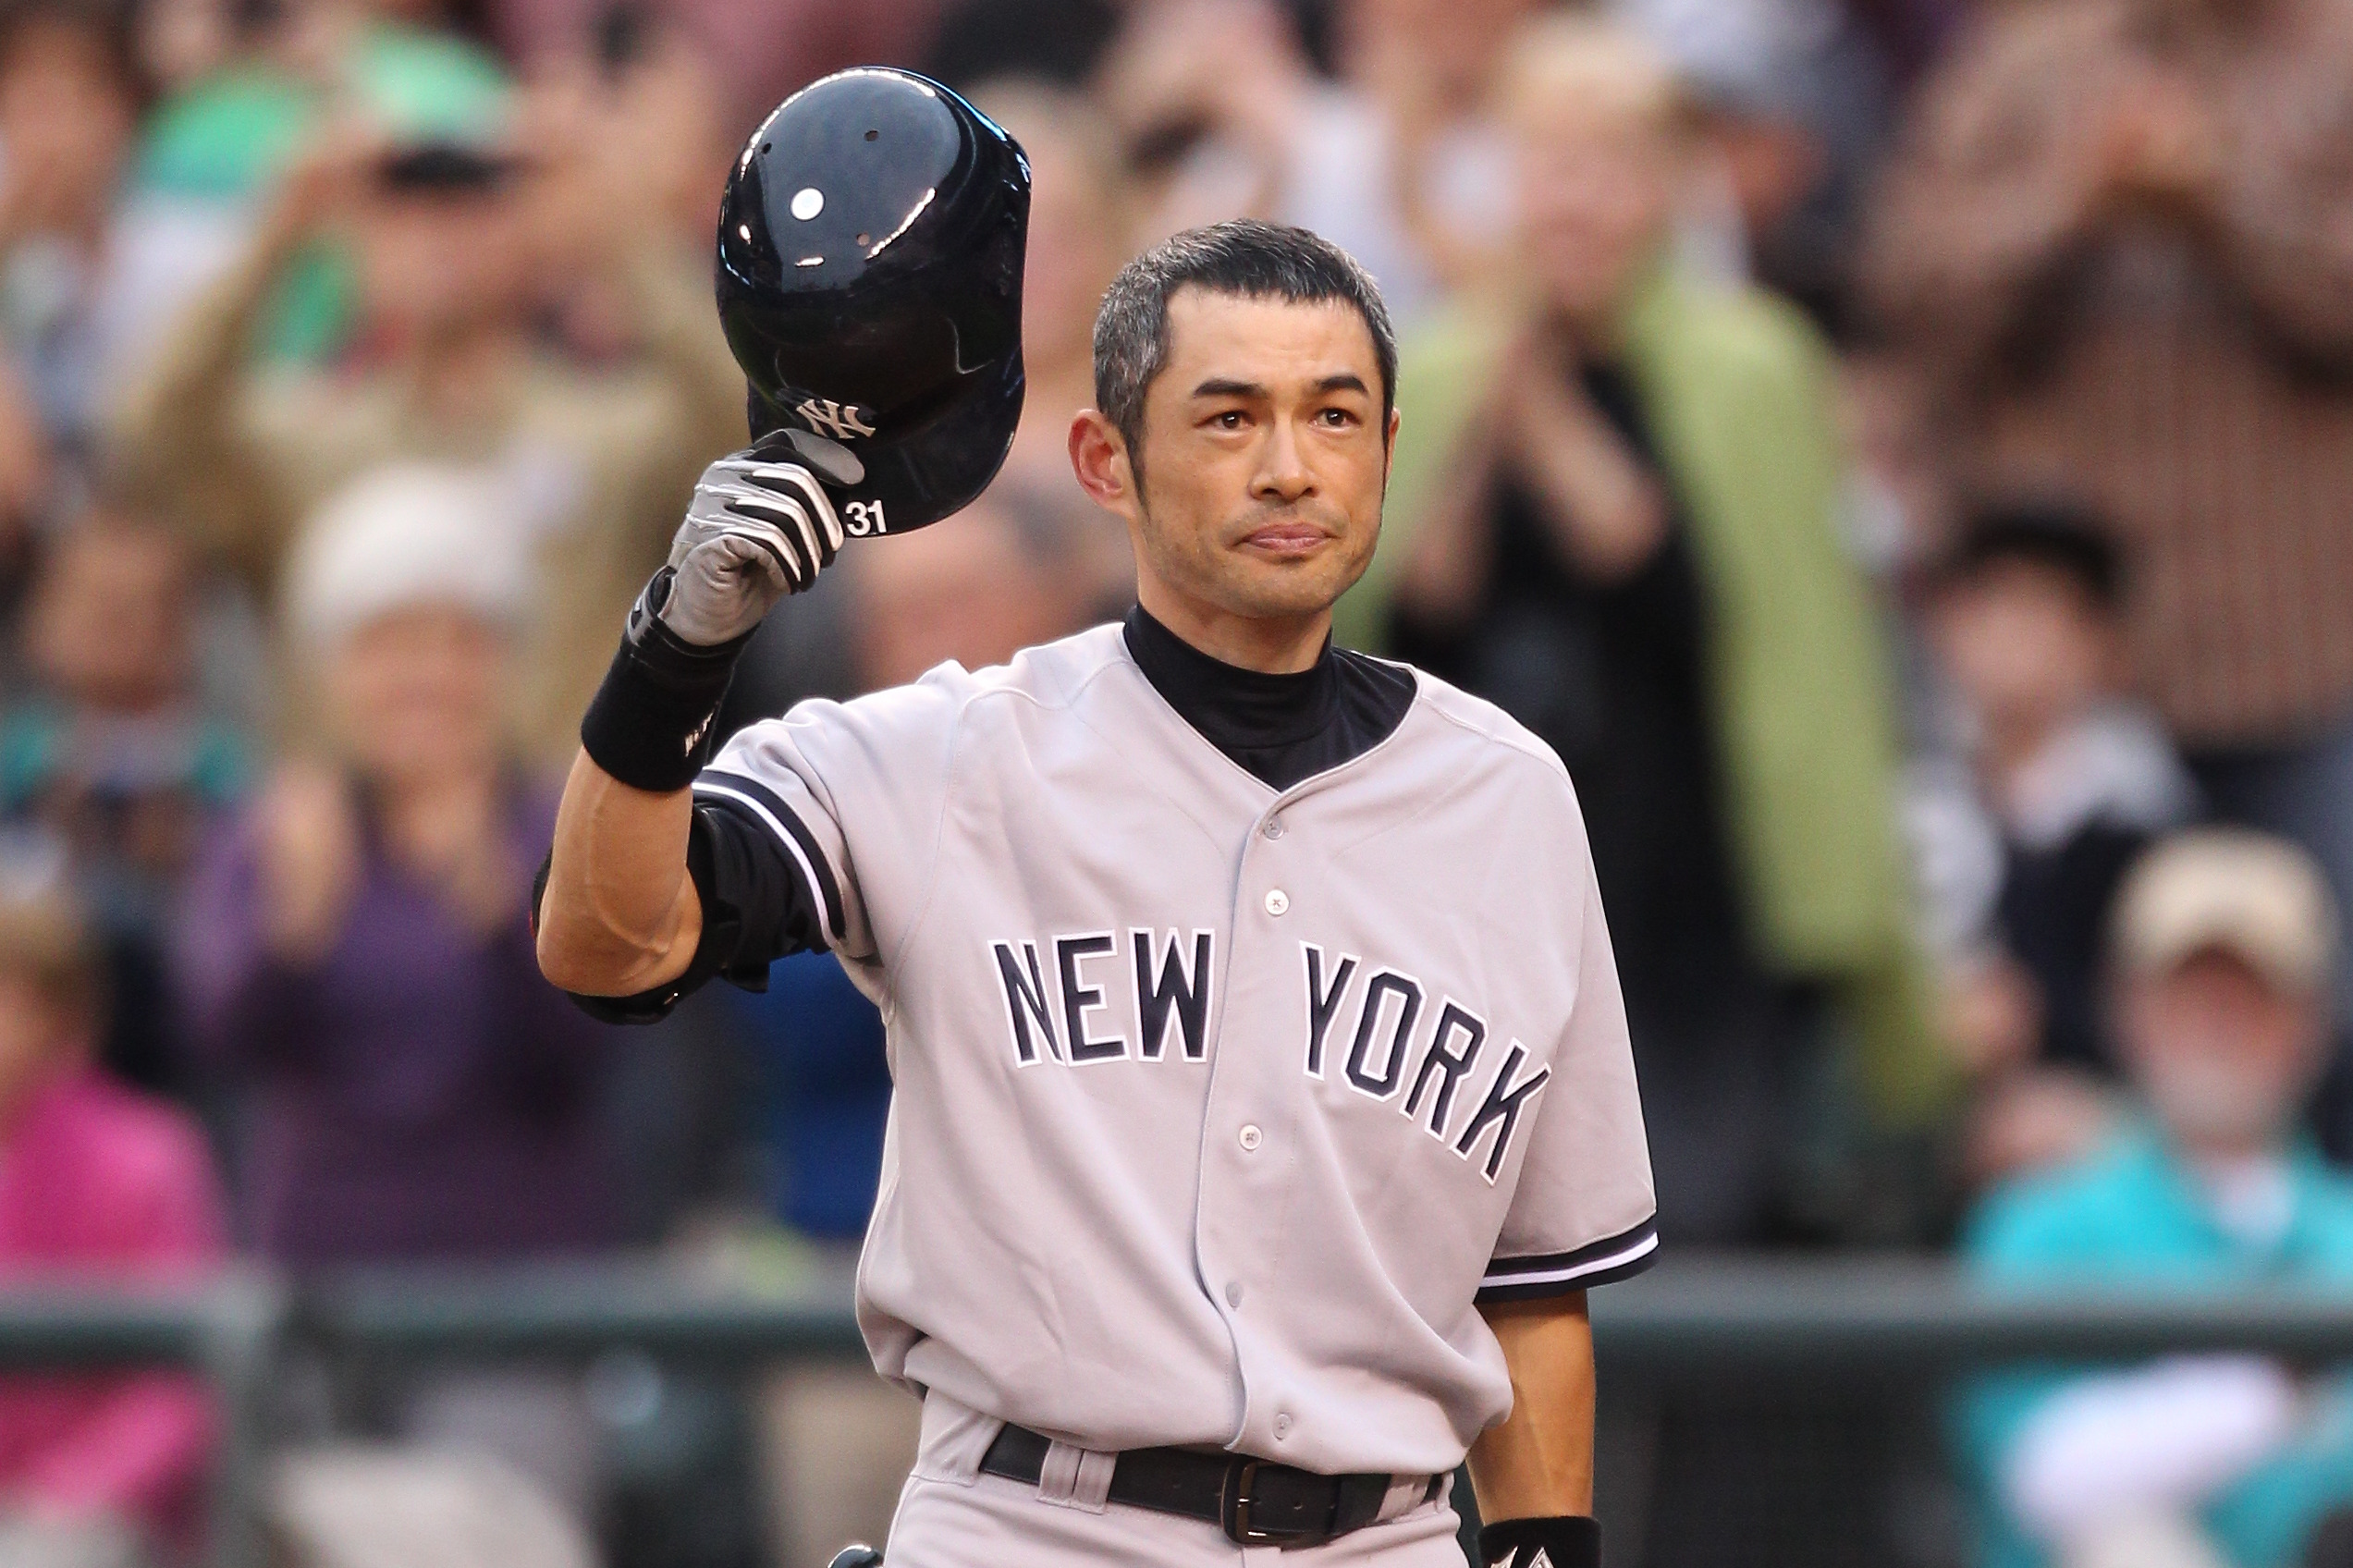 More major milestones ahead for Ichiro Suzuki - Fish Stripes